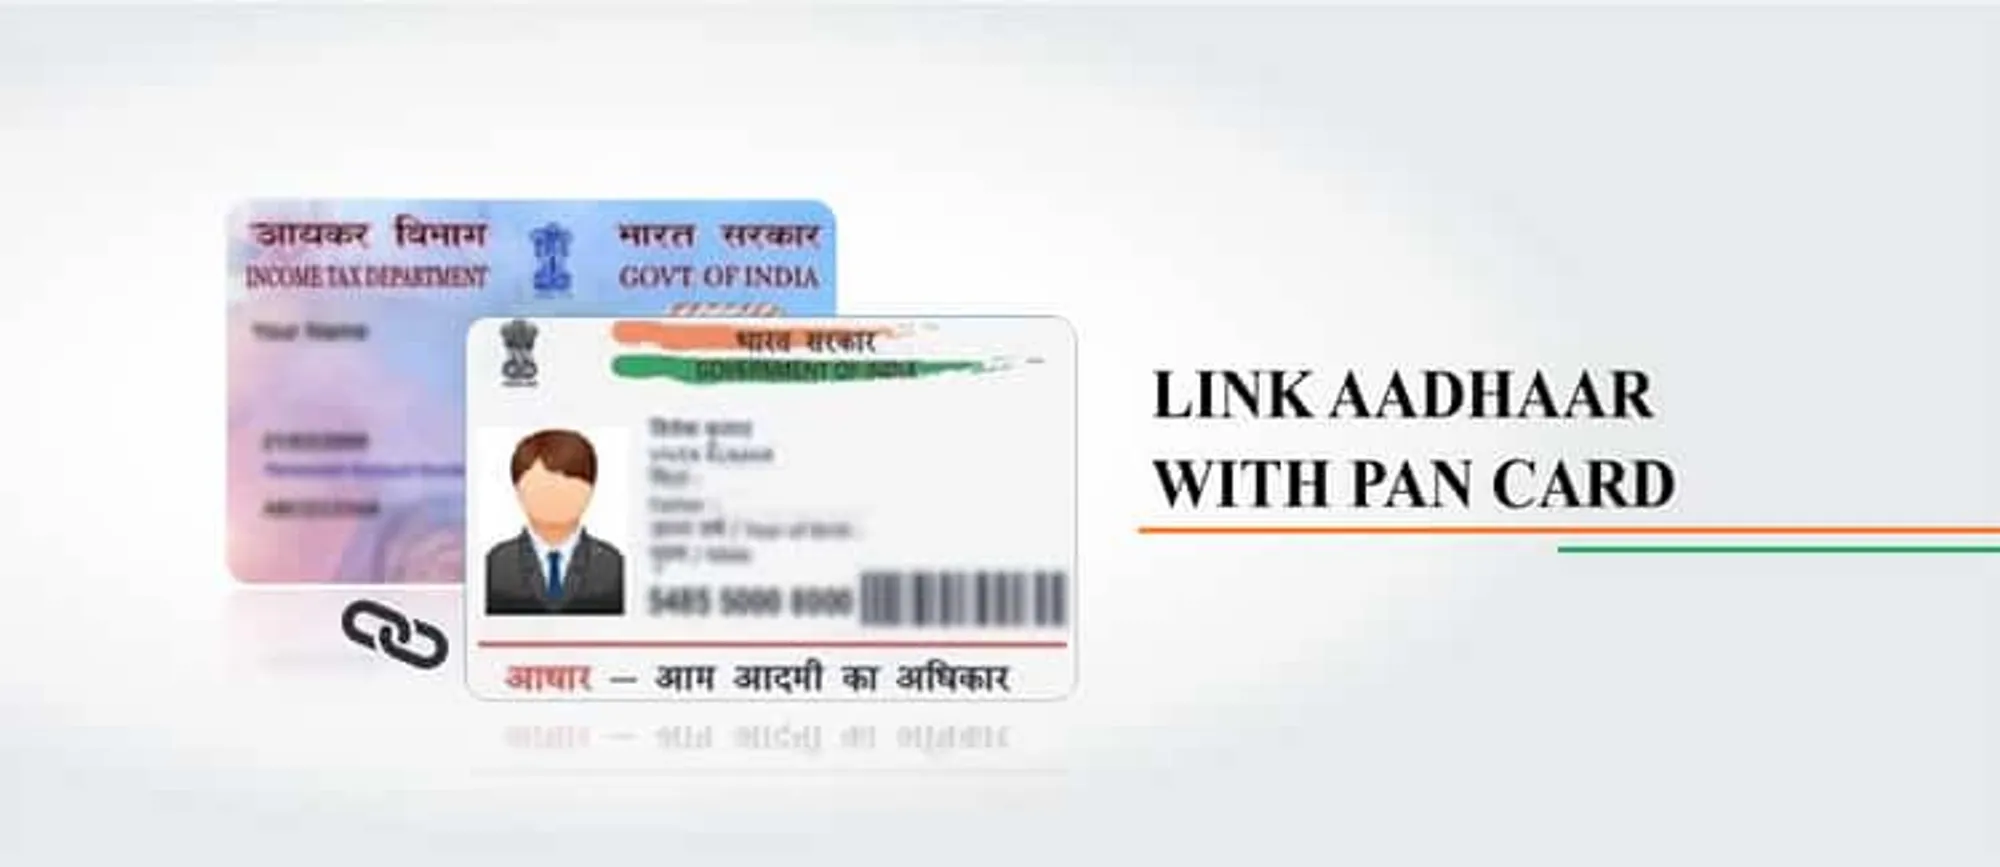 Should we link Aadhaar card with the PAN card